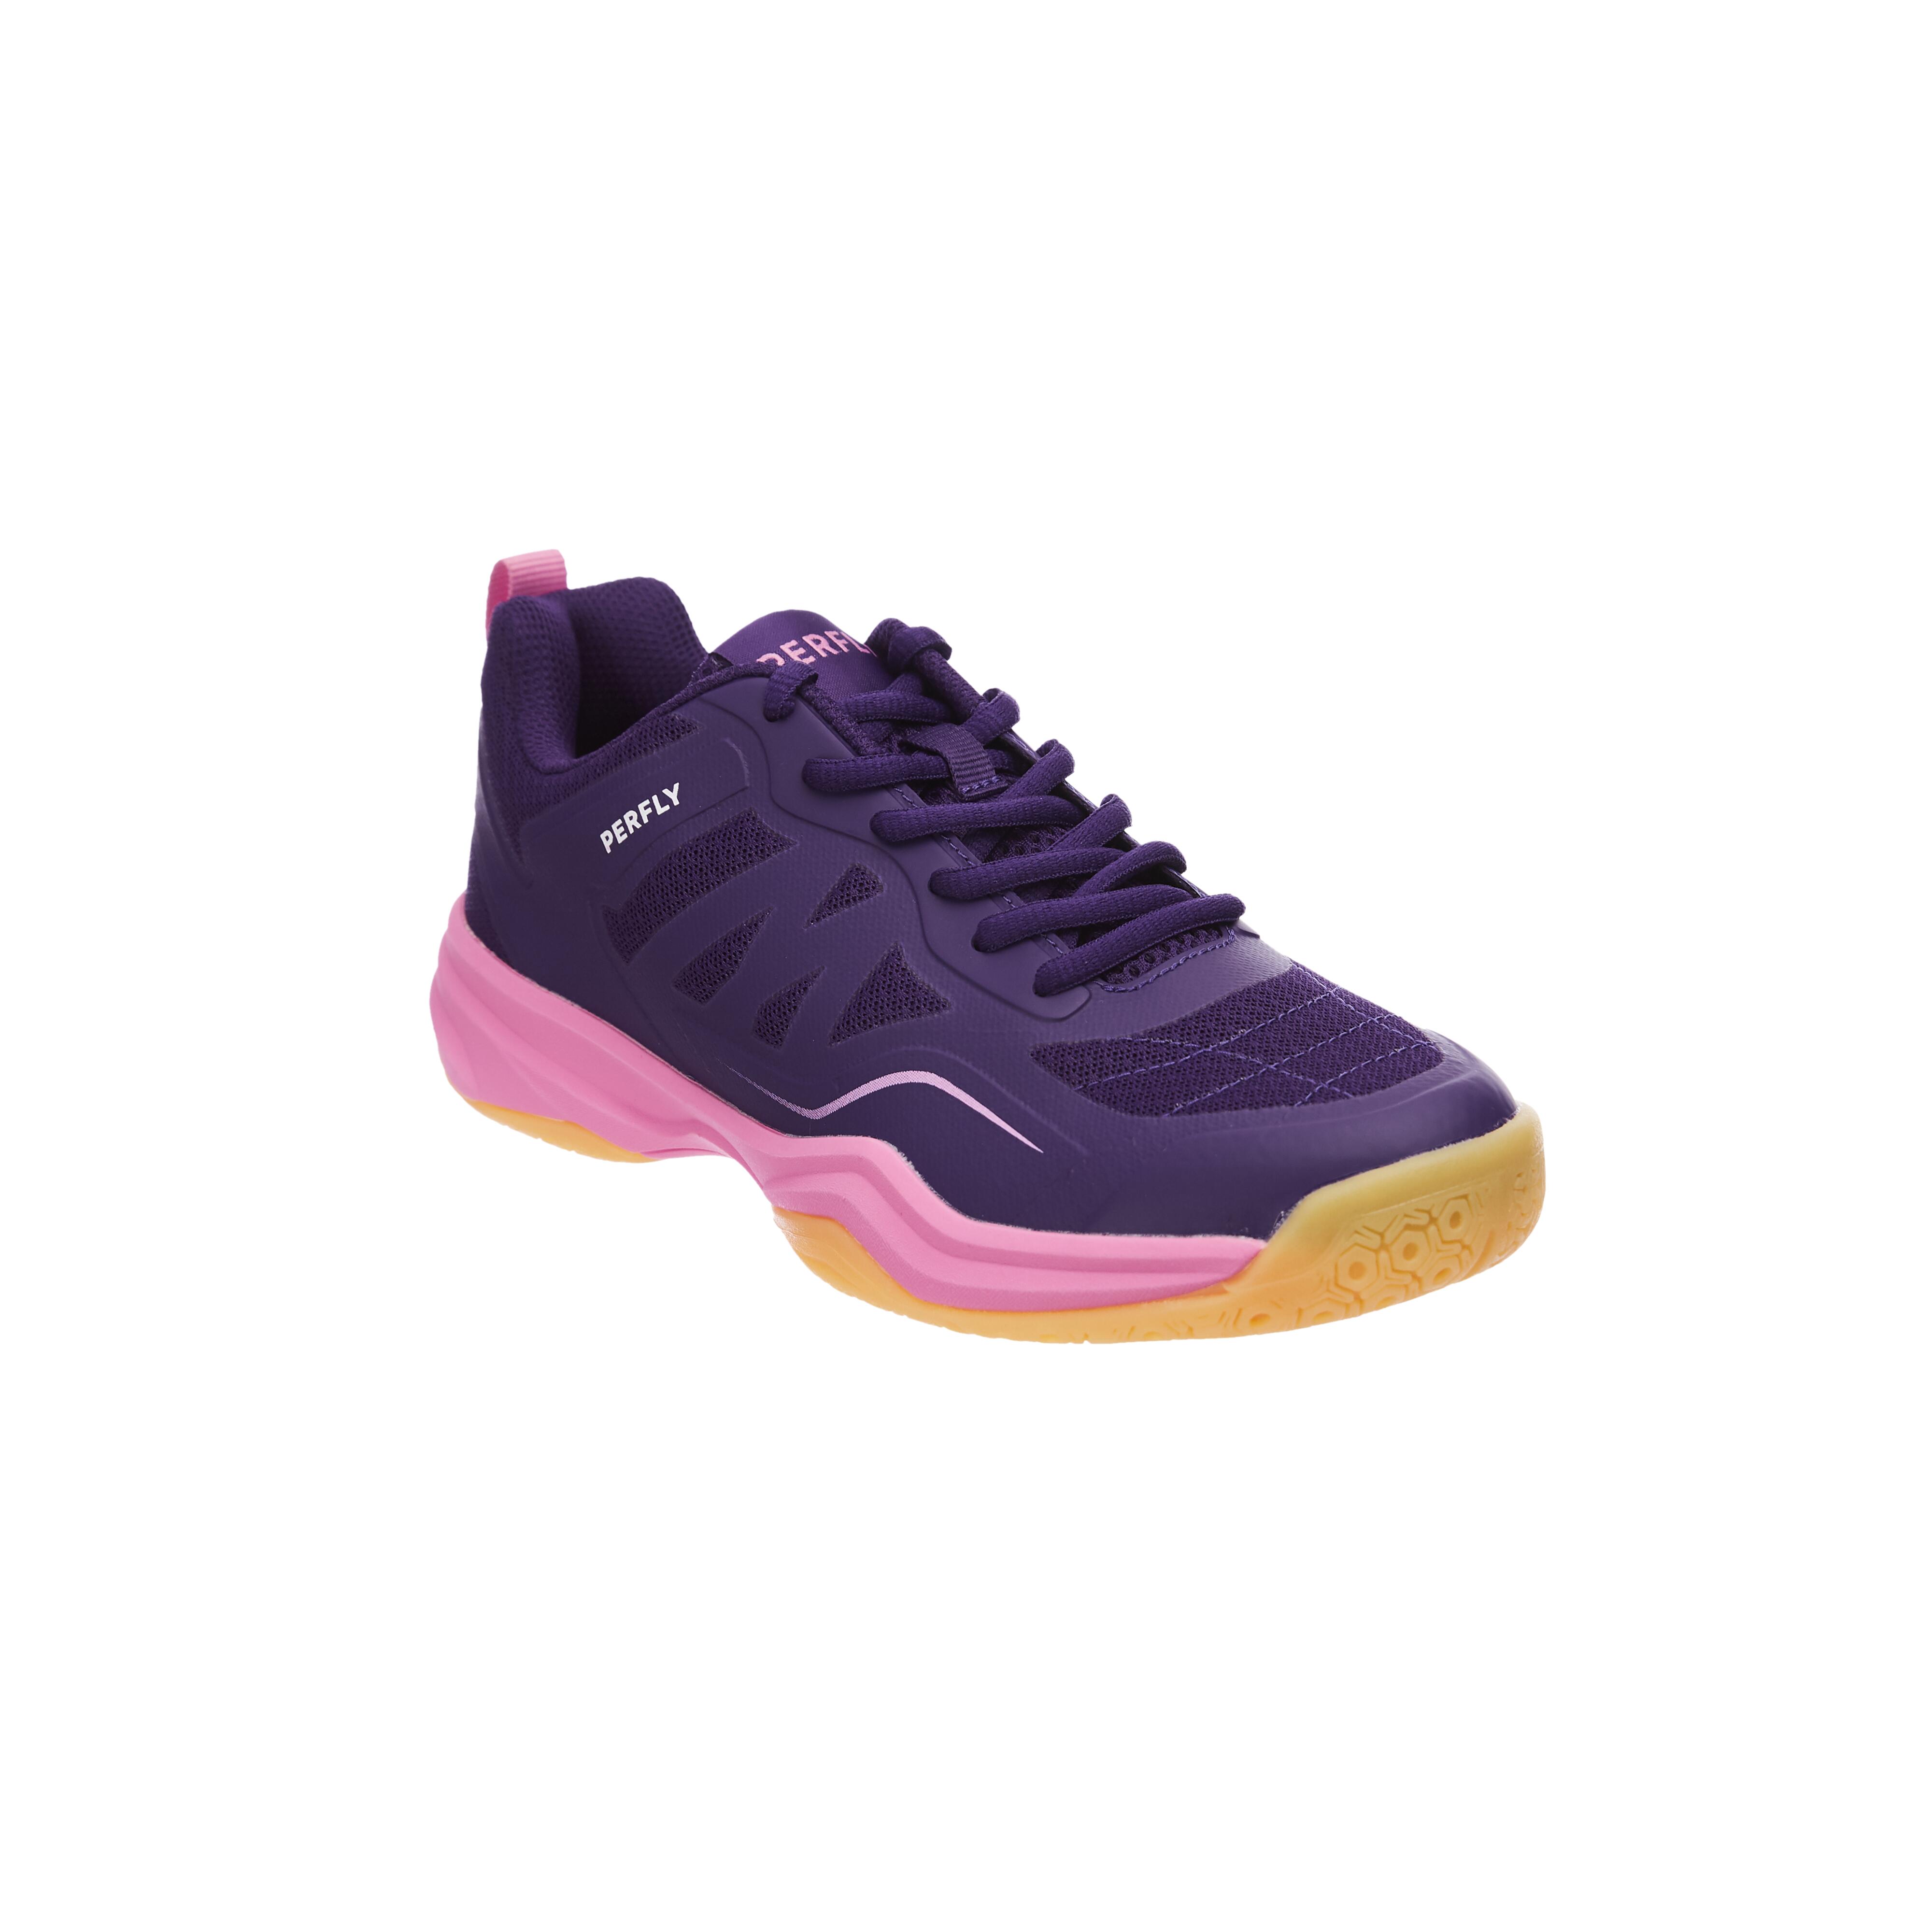 Yonex's Lightest Shoe: AERUS 2